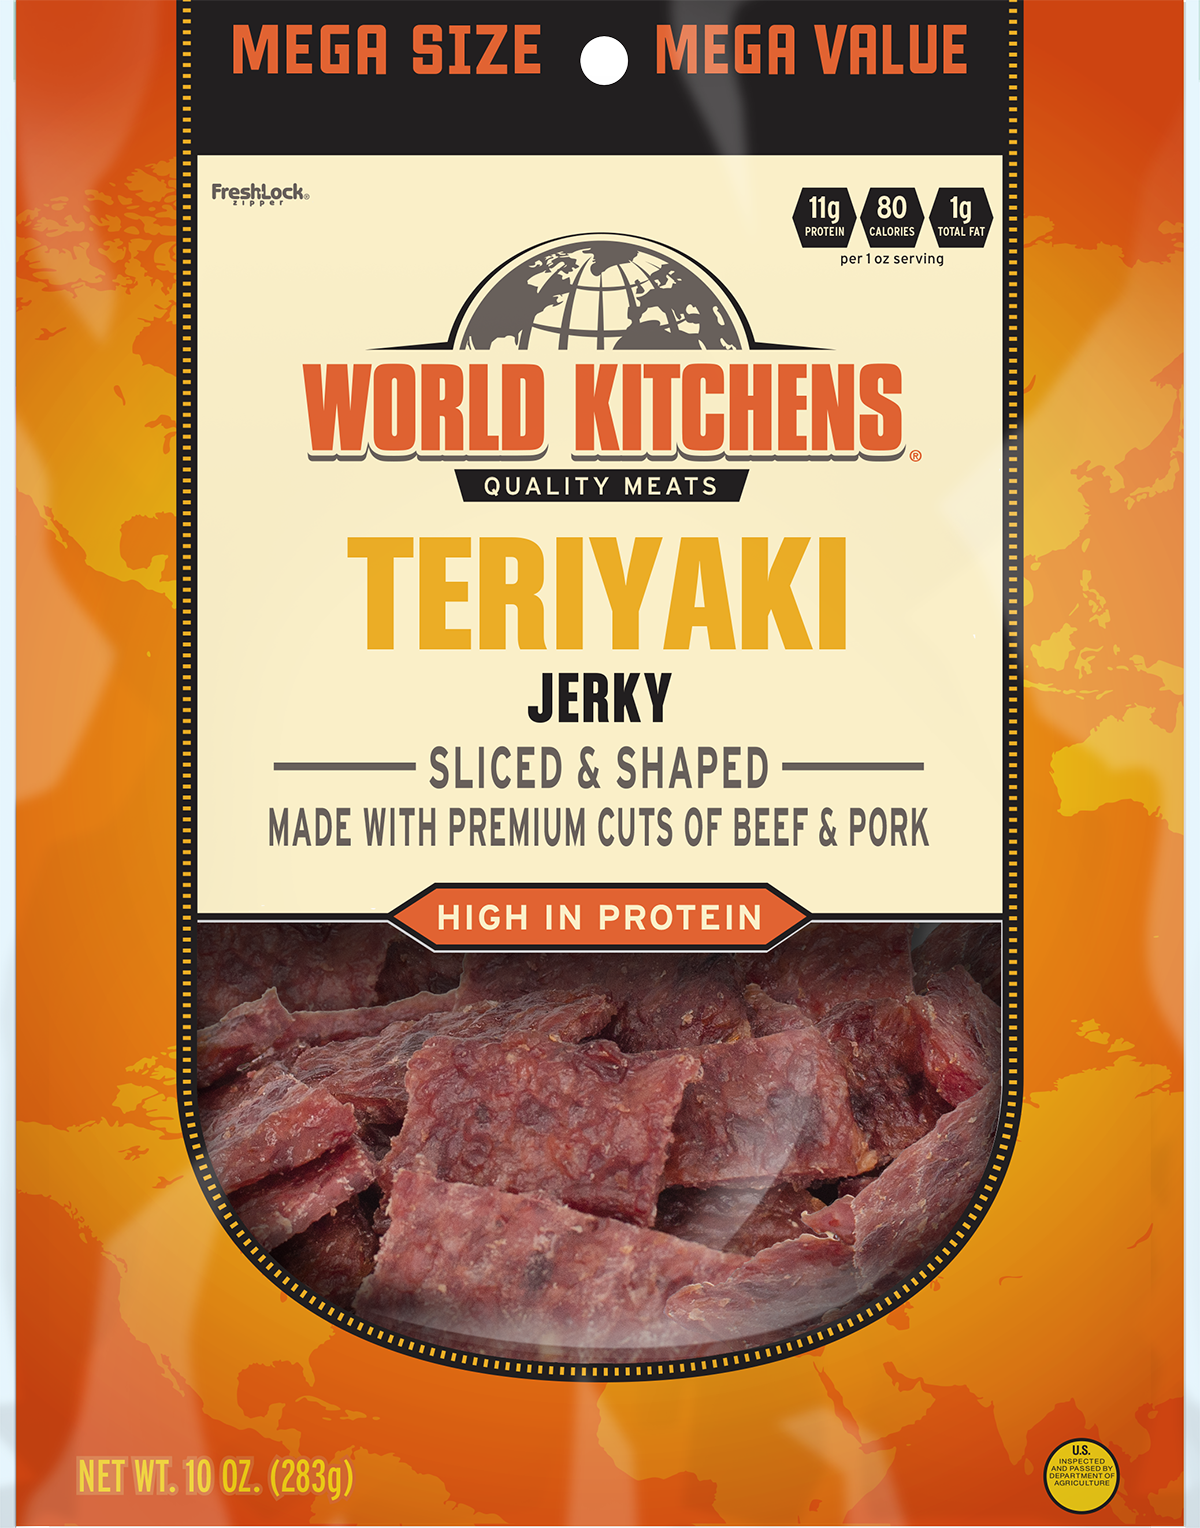 World Kitchen's Teriyaki Jerky